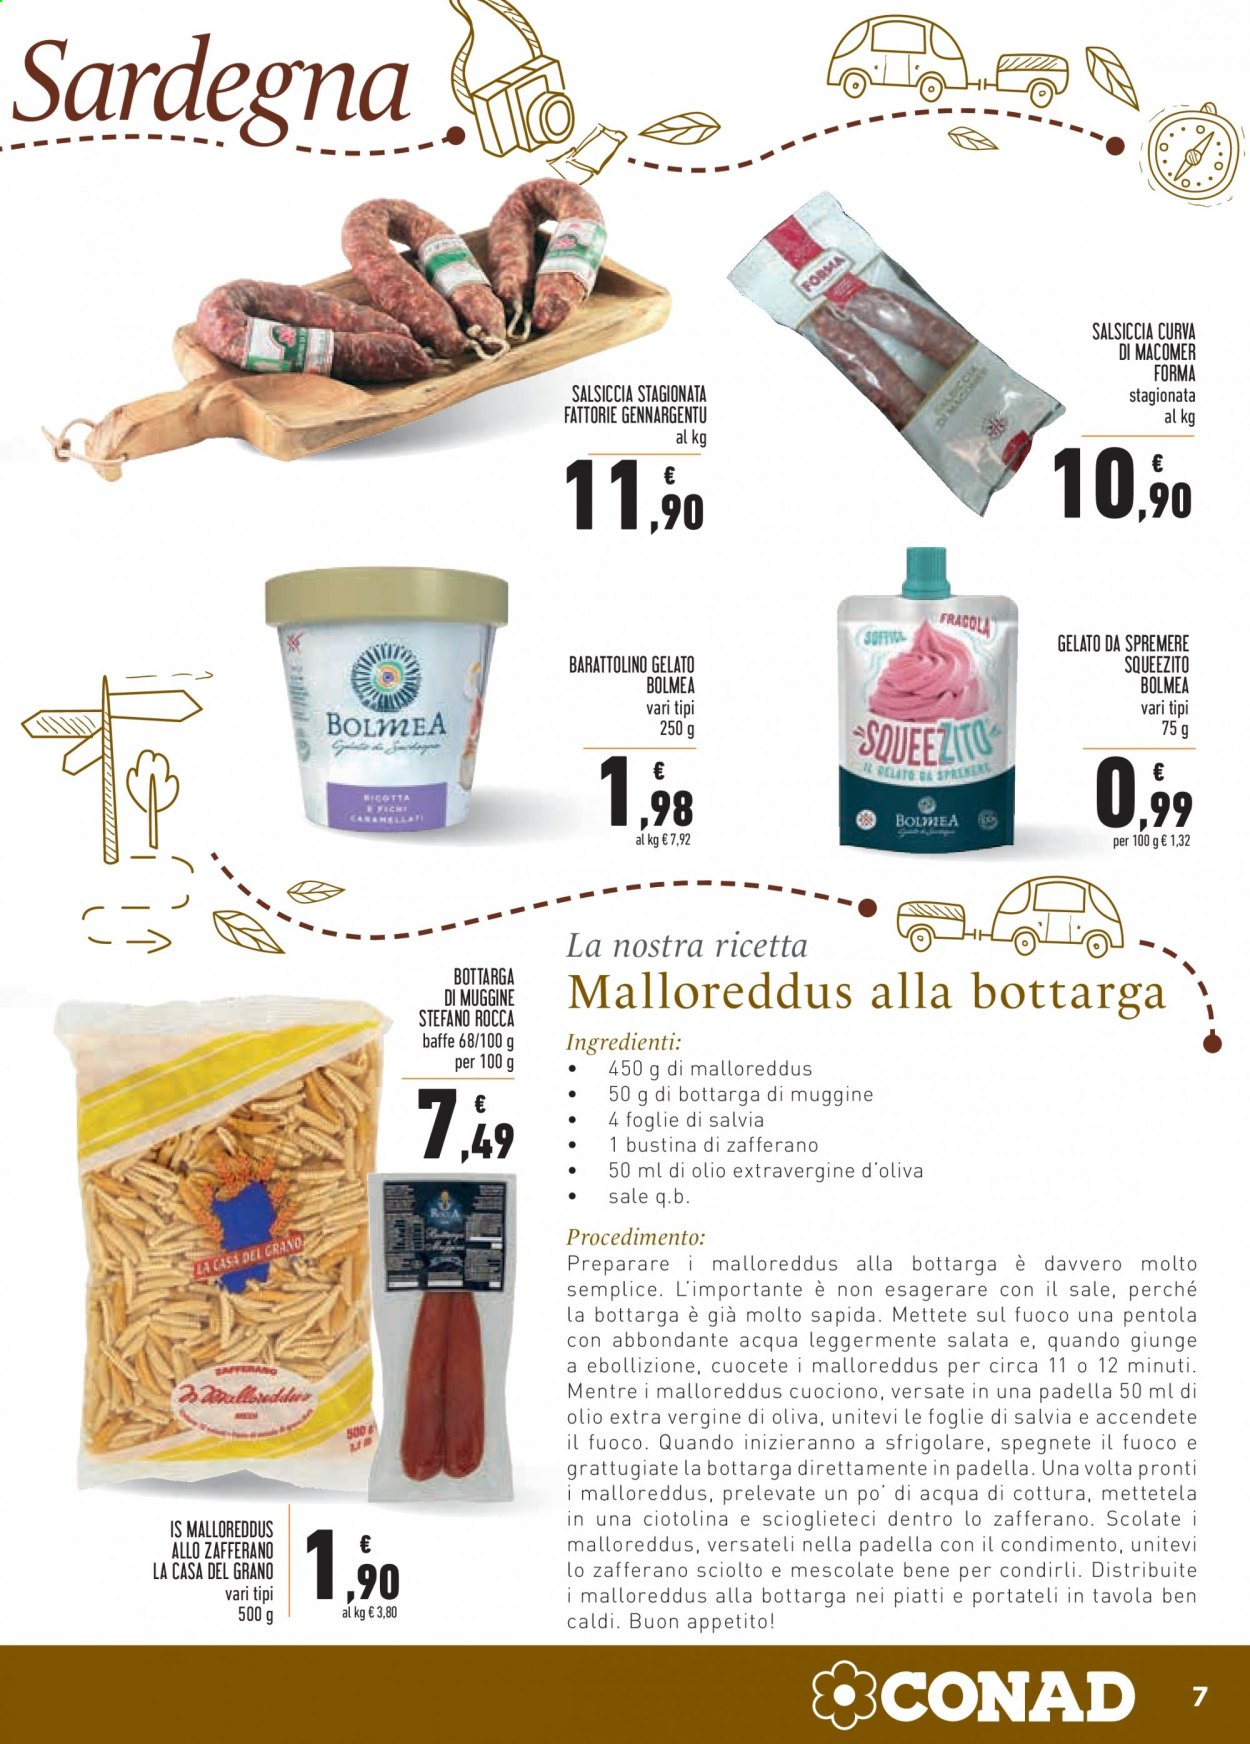 thumbnail - Volantino Conad - 6/4/2021 - 18/4/2021 - Prodotti in offerta - salsiccia, salsiccia stagionata, bottarga, bottarga di muggine, gelato, piatti. Pagina 7.